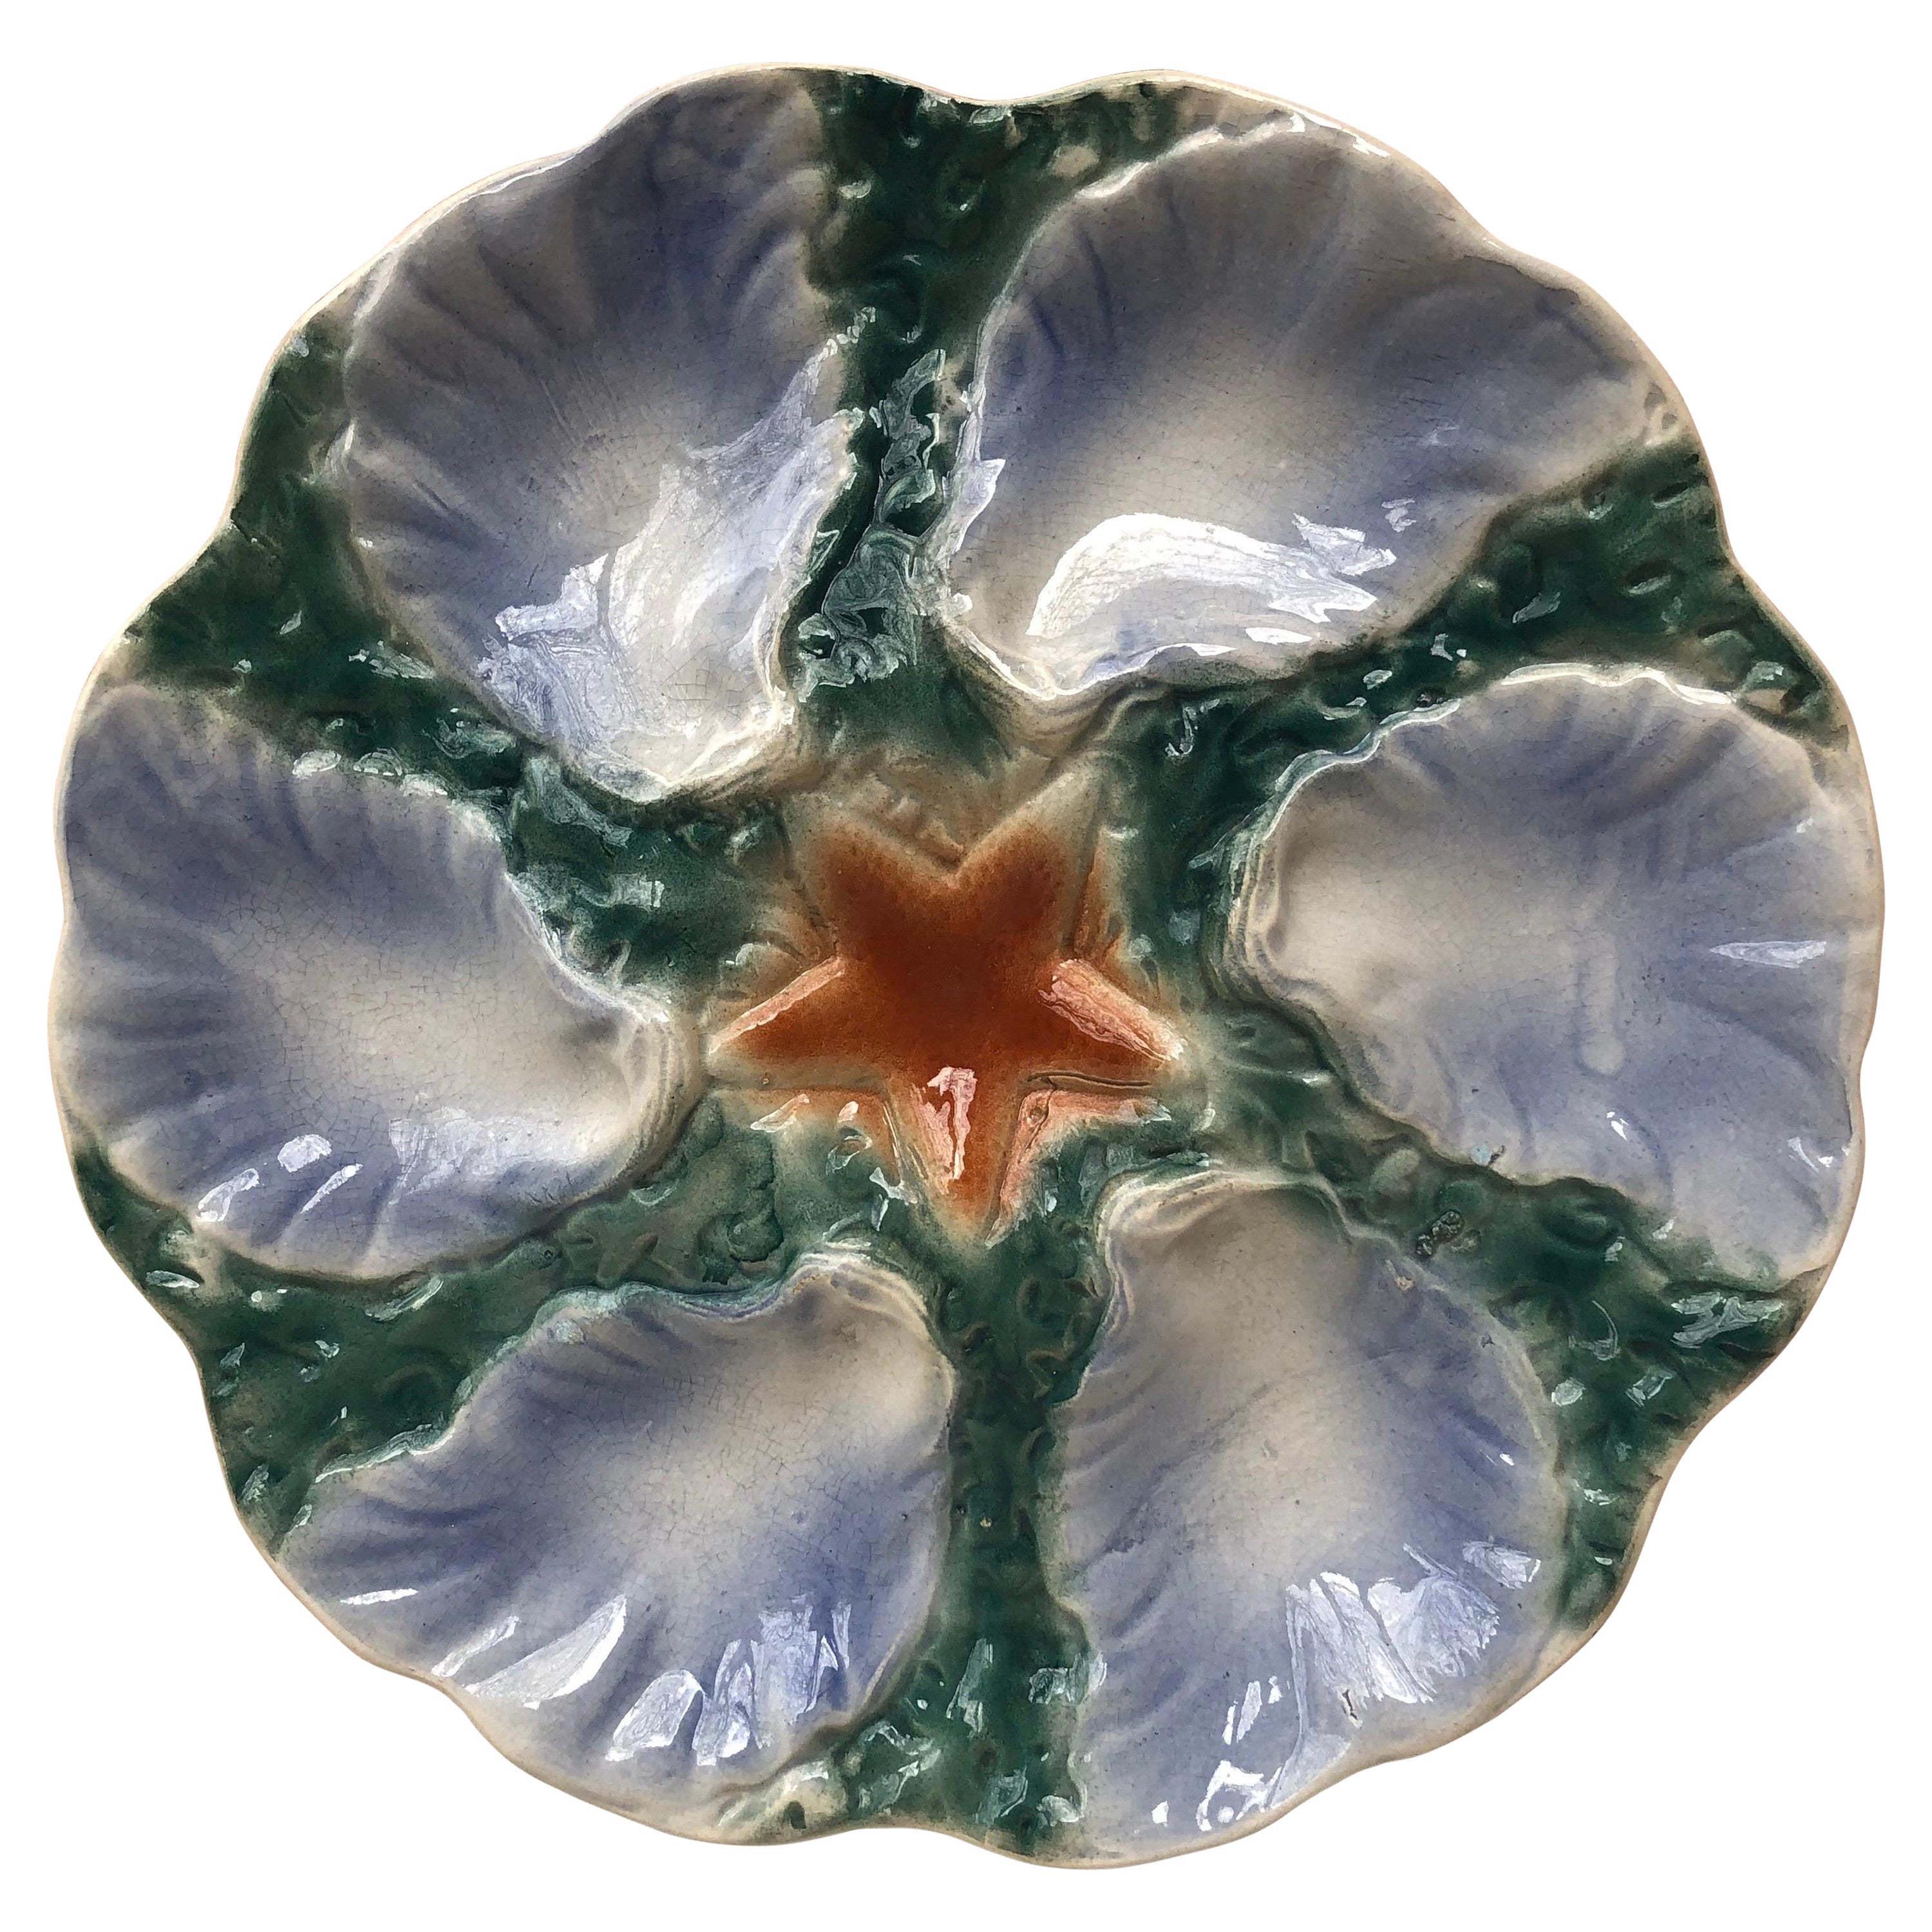 Majolica Oyster Blue Starfish Plate Digoin, circa 1910